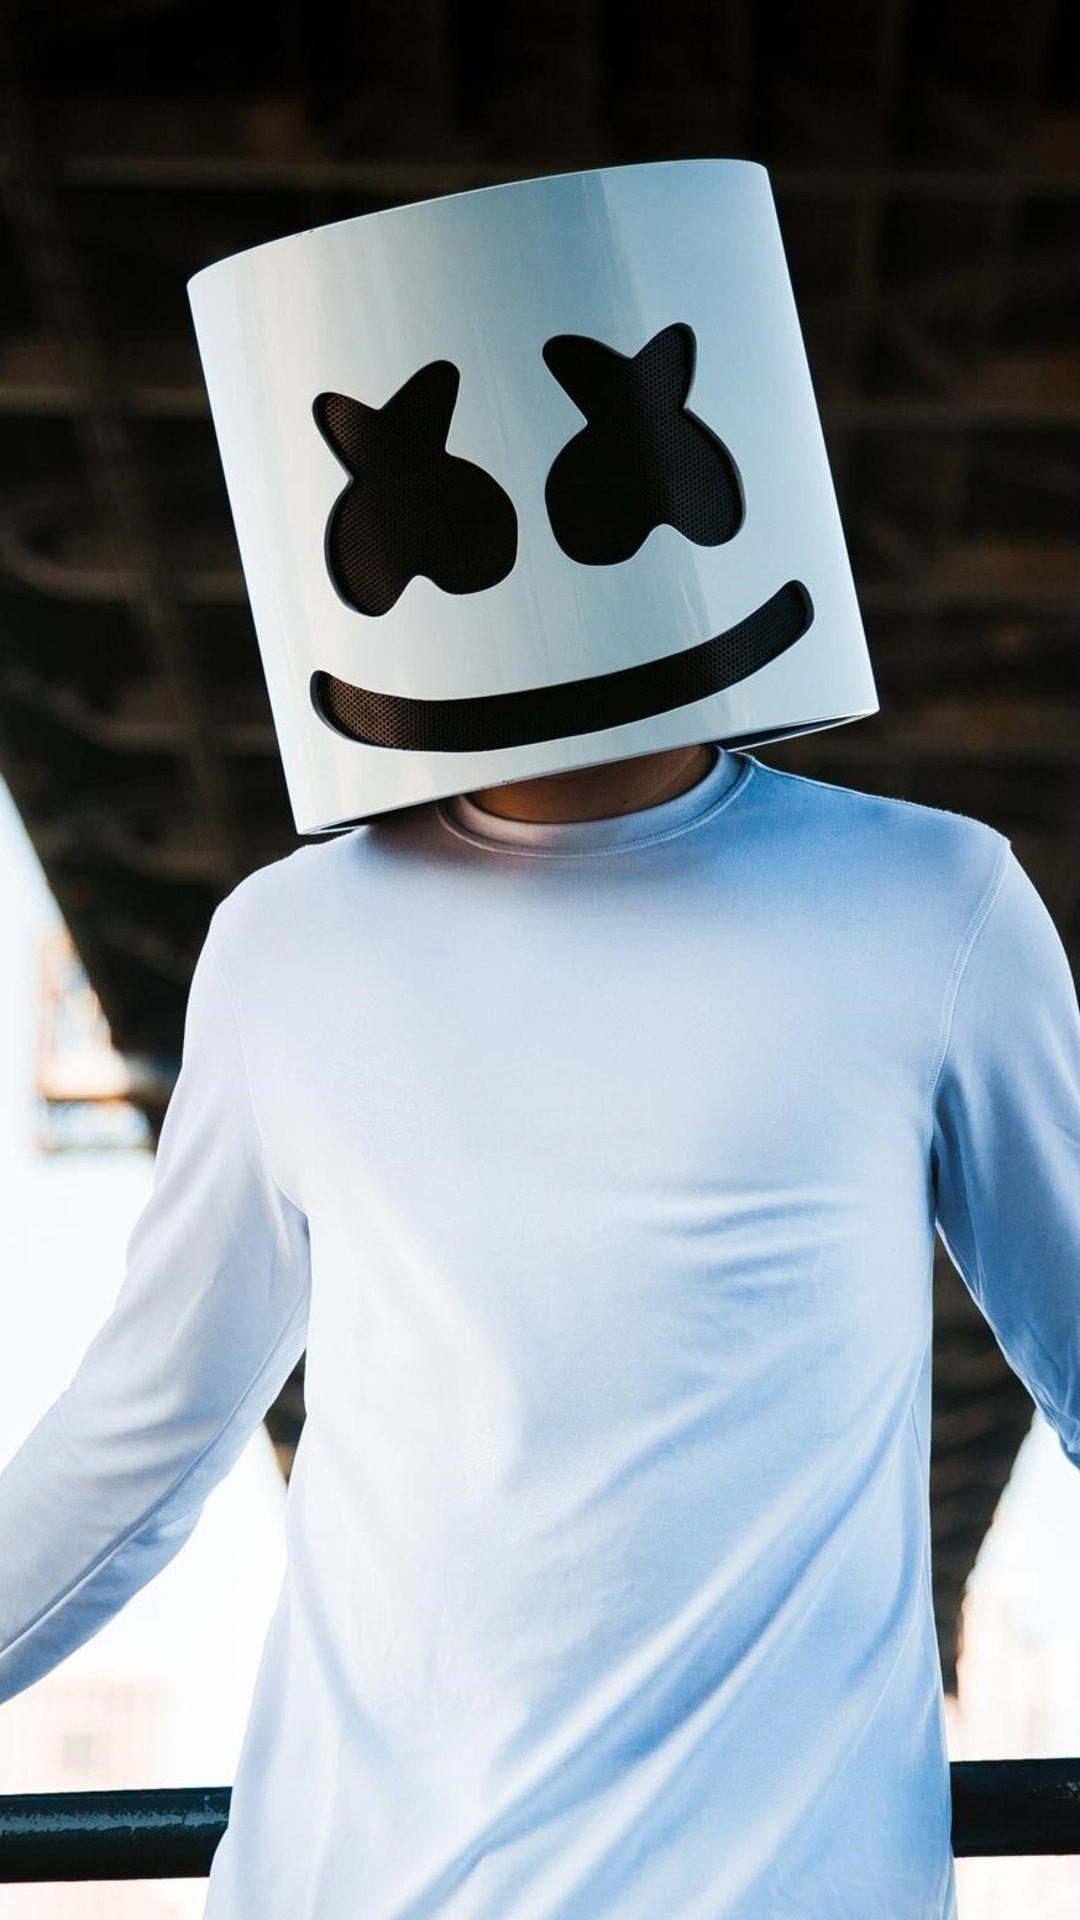 Marshmello DJ Mask In 1080x1920 Resolution. Marshmallow picture, Music wallpaper, Joker iphone wallpaper